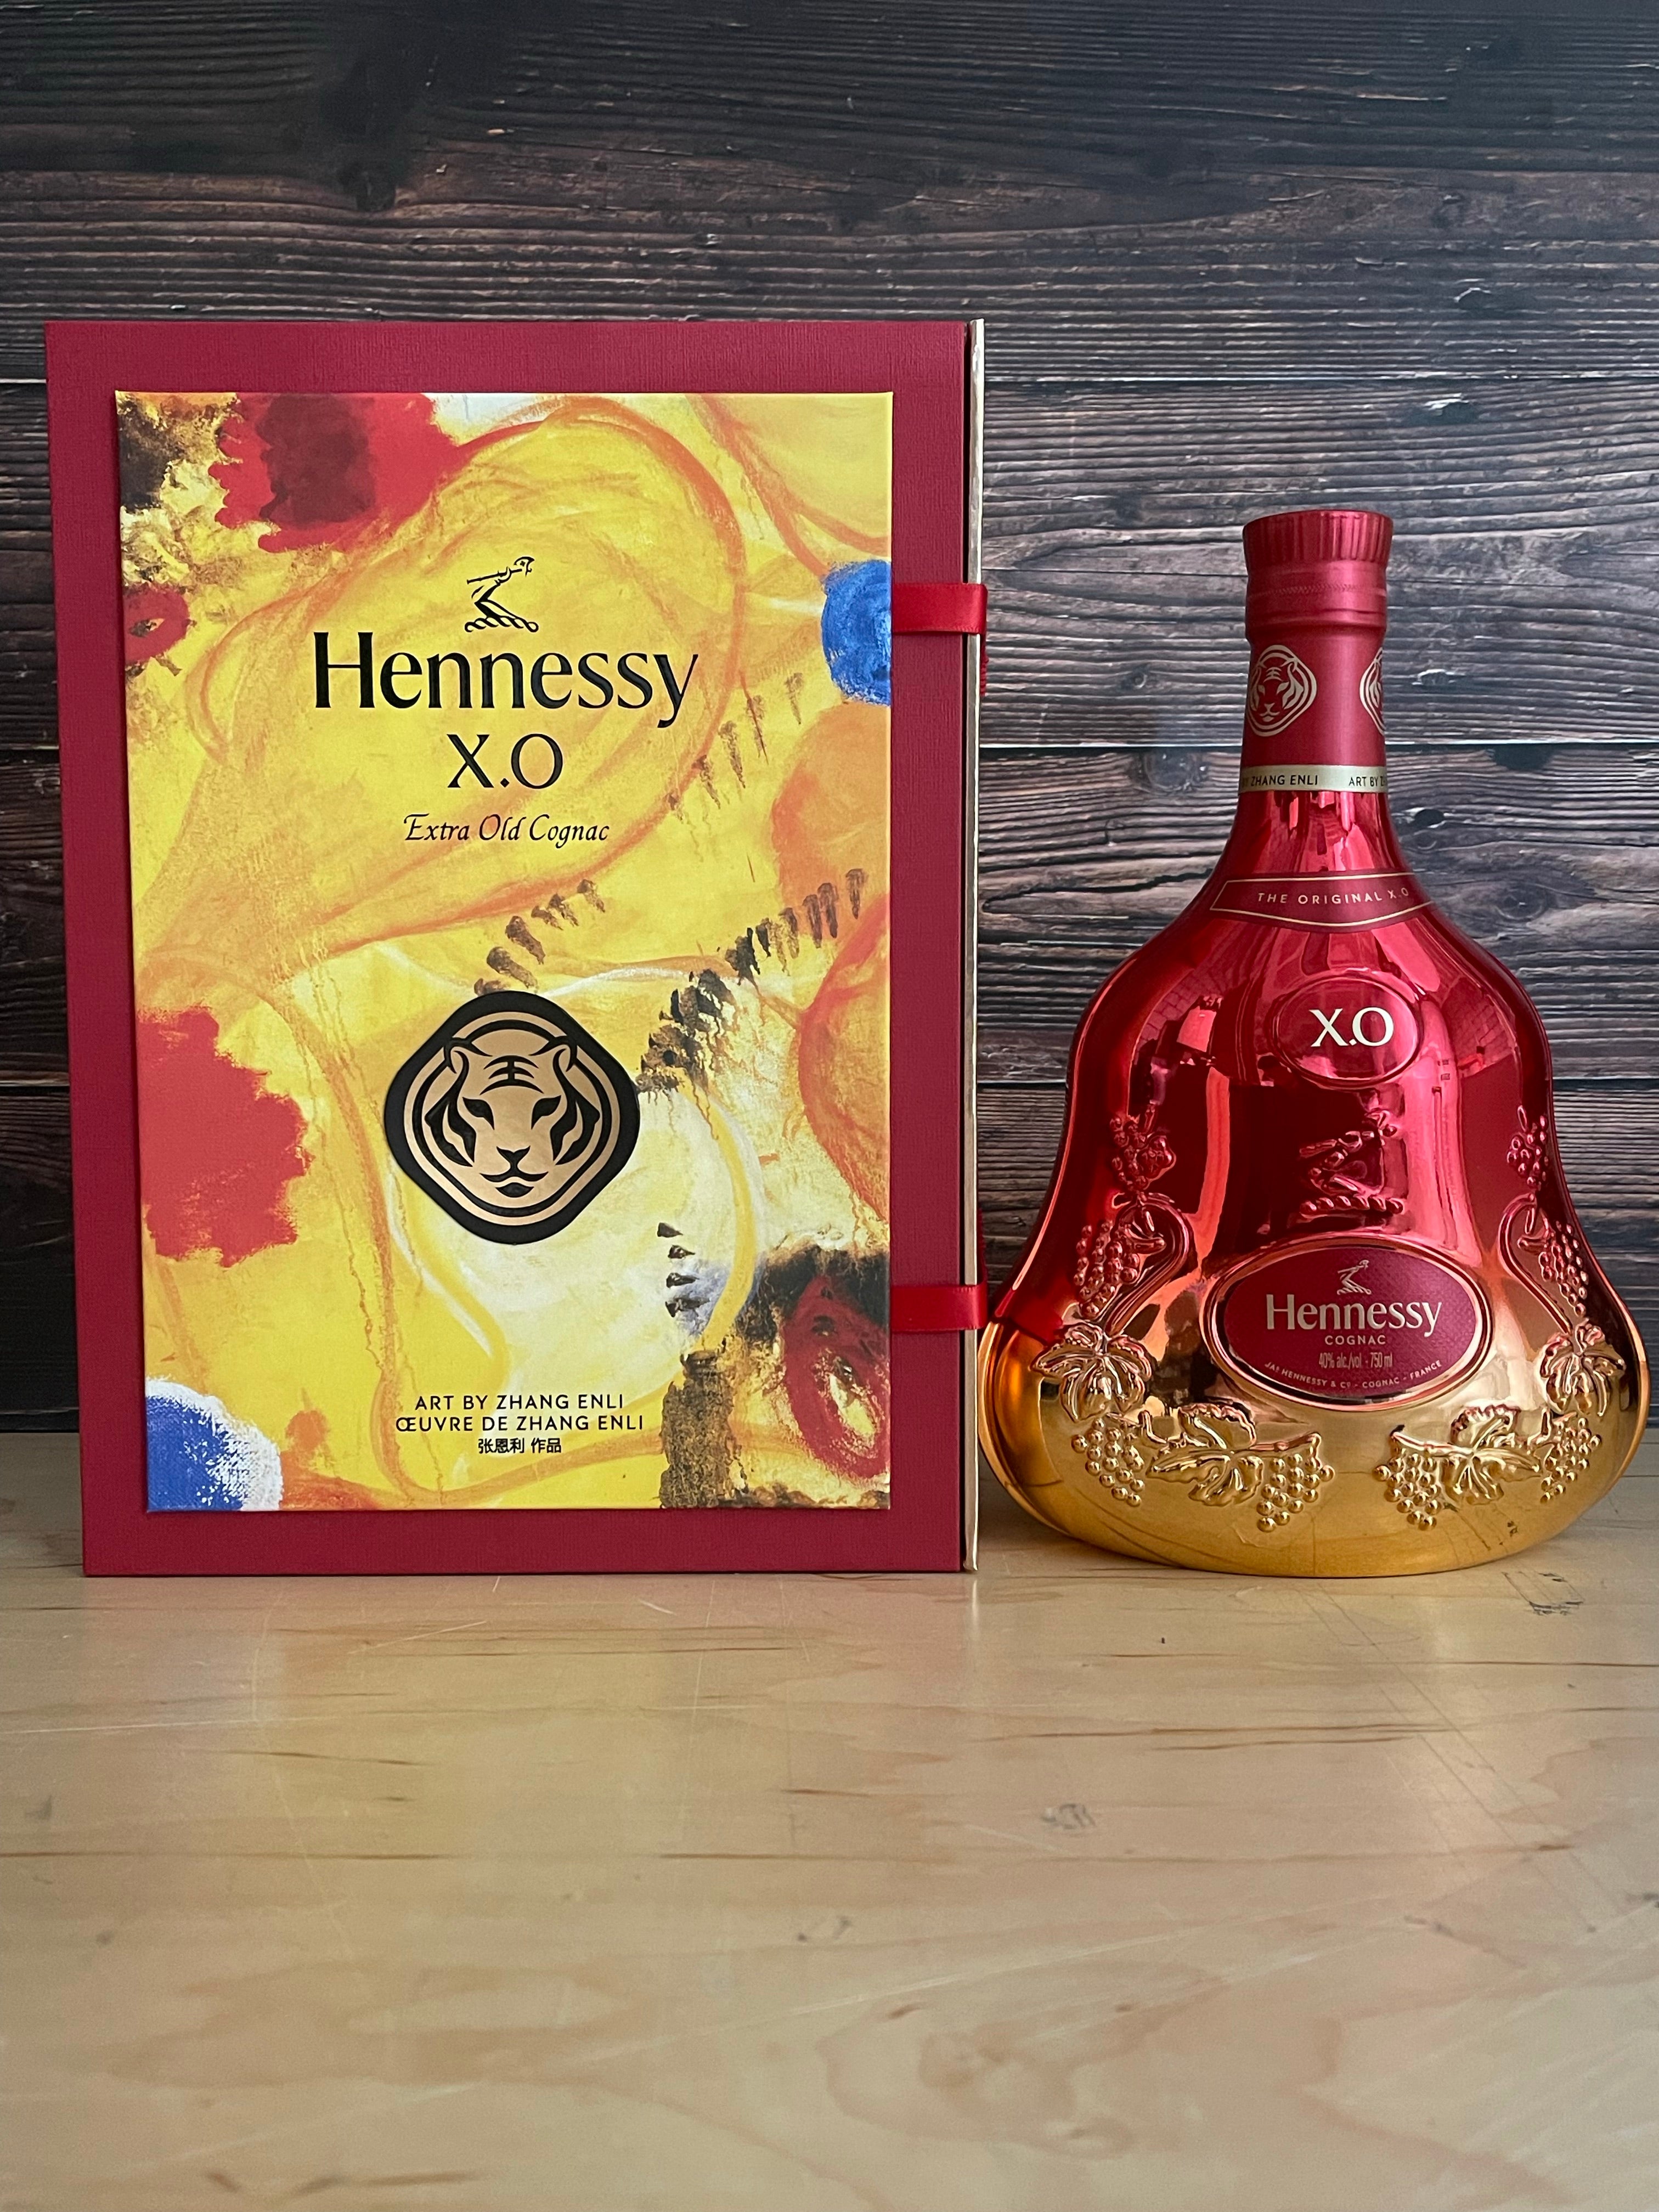 Hennessy XO Cognac 2020